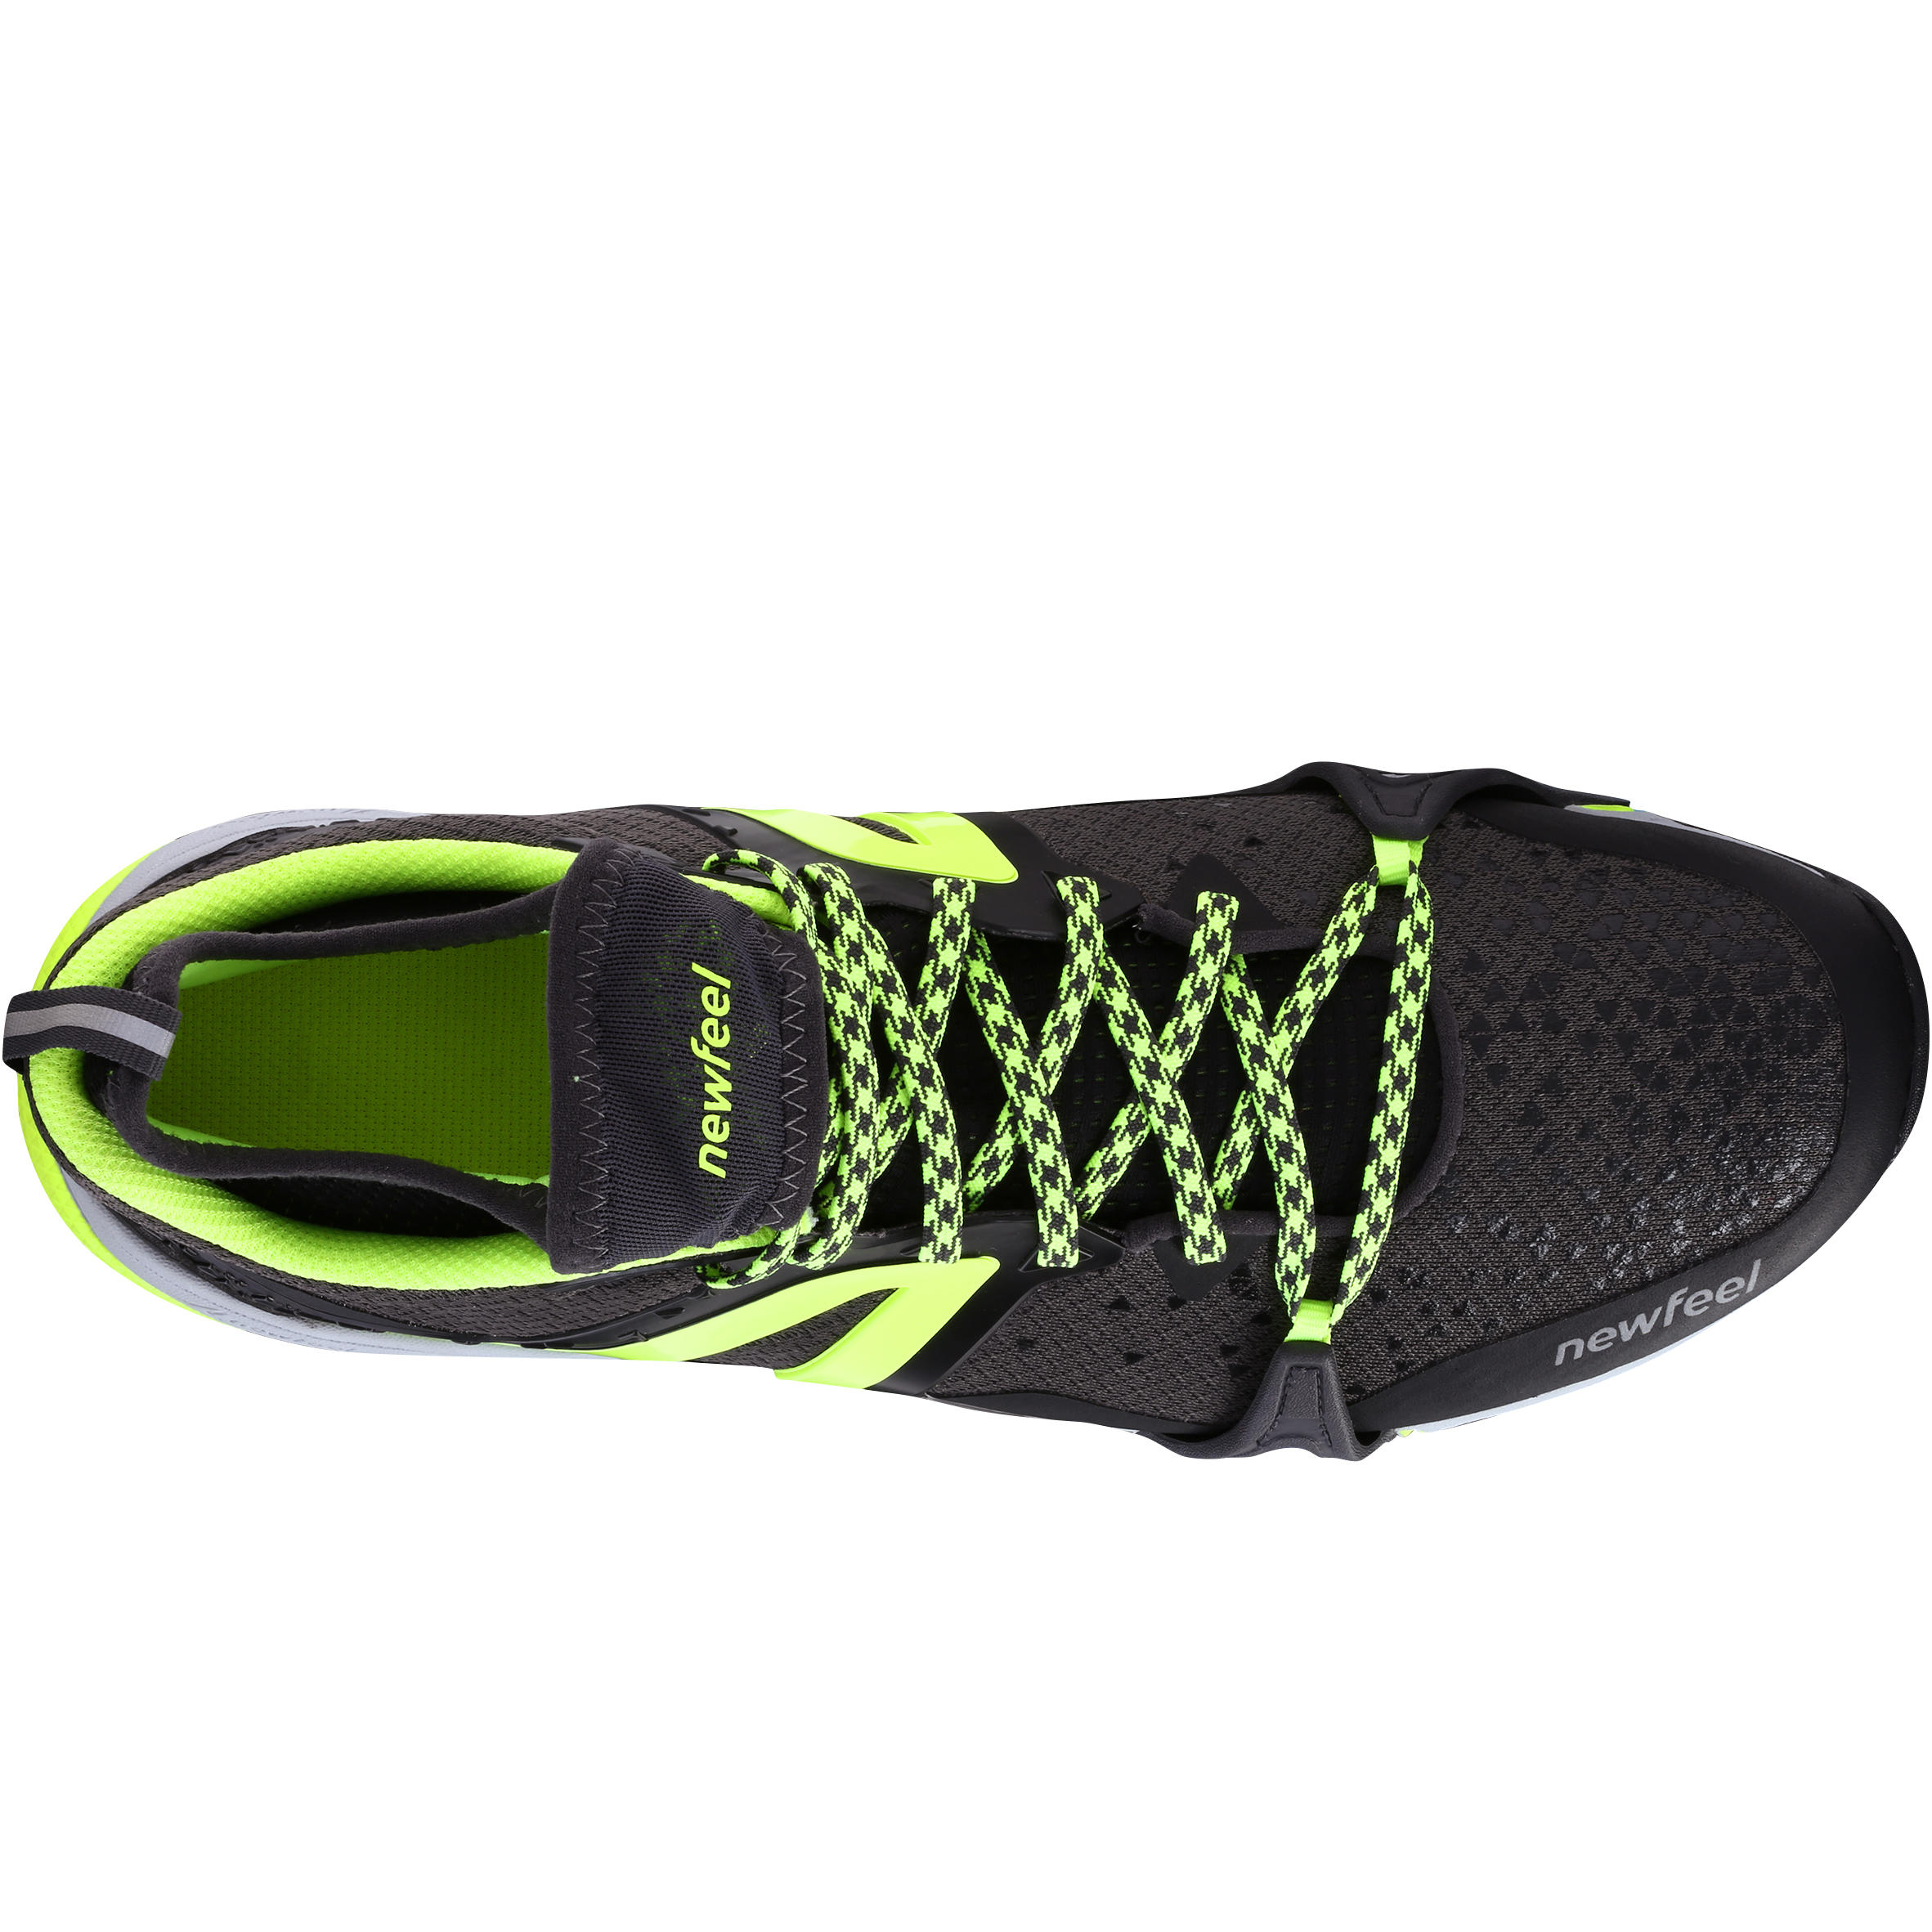 Men's Nordic Walking Shoes NW 900 Flex-H - Black/Green 8/8